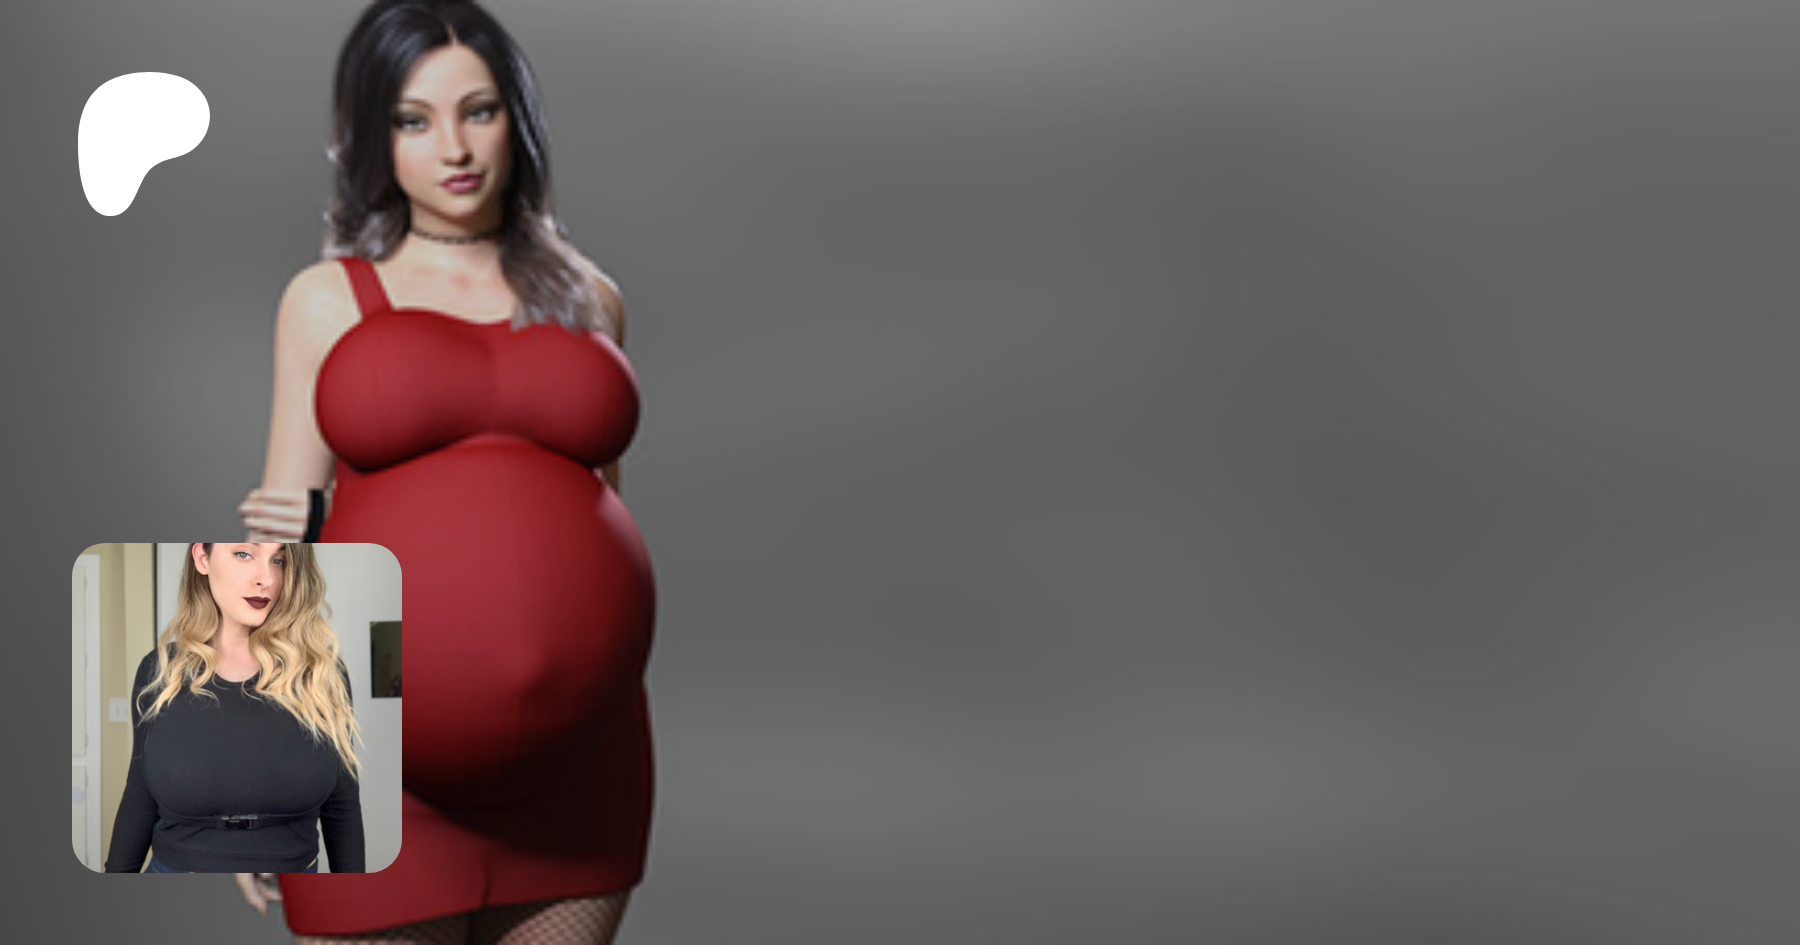 FreyaStrahug on X: Trick or treat?! 👻 #pregnant #pregnantbelly #busty # pregnancy #pregnantkink #curvy #pregnantmodel #pregnancykink   / X